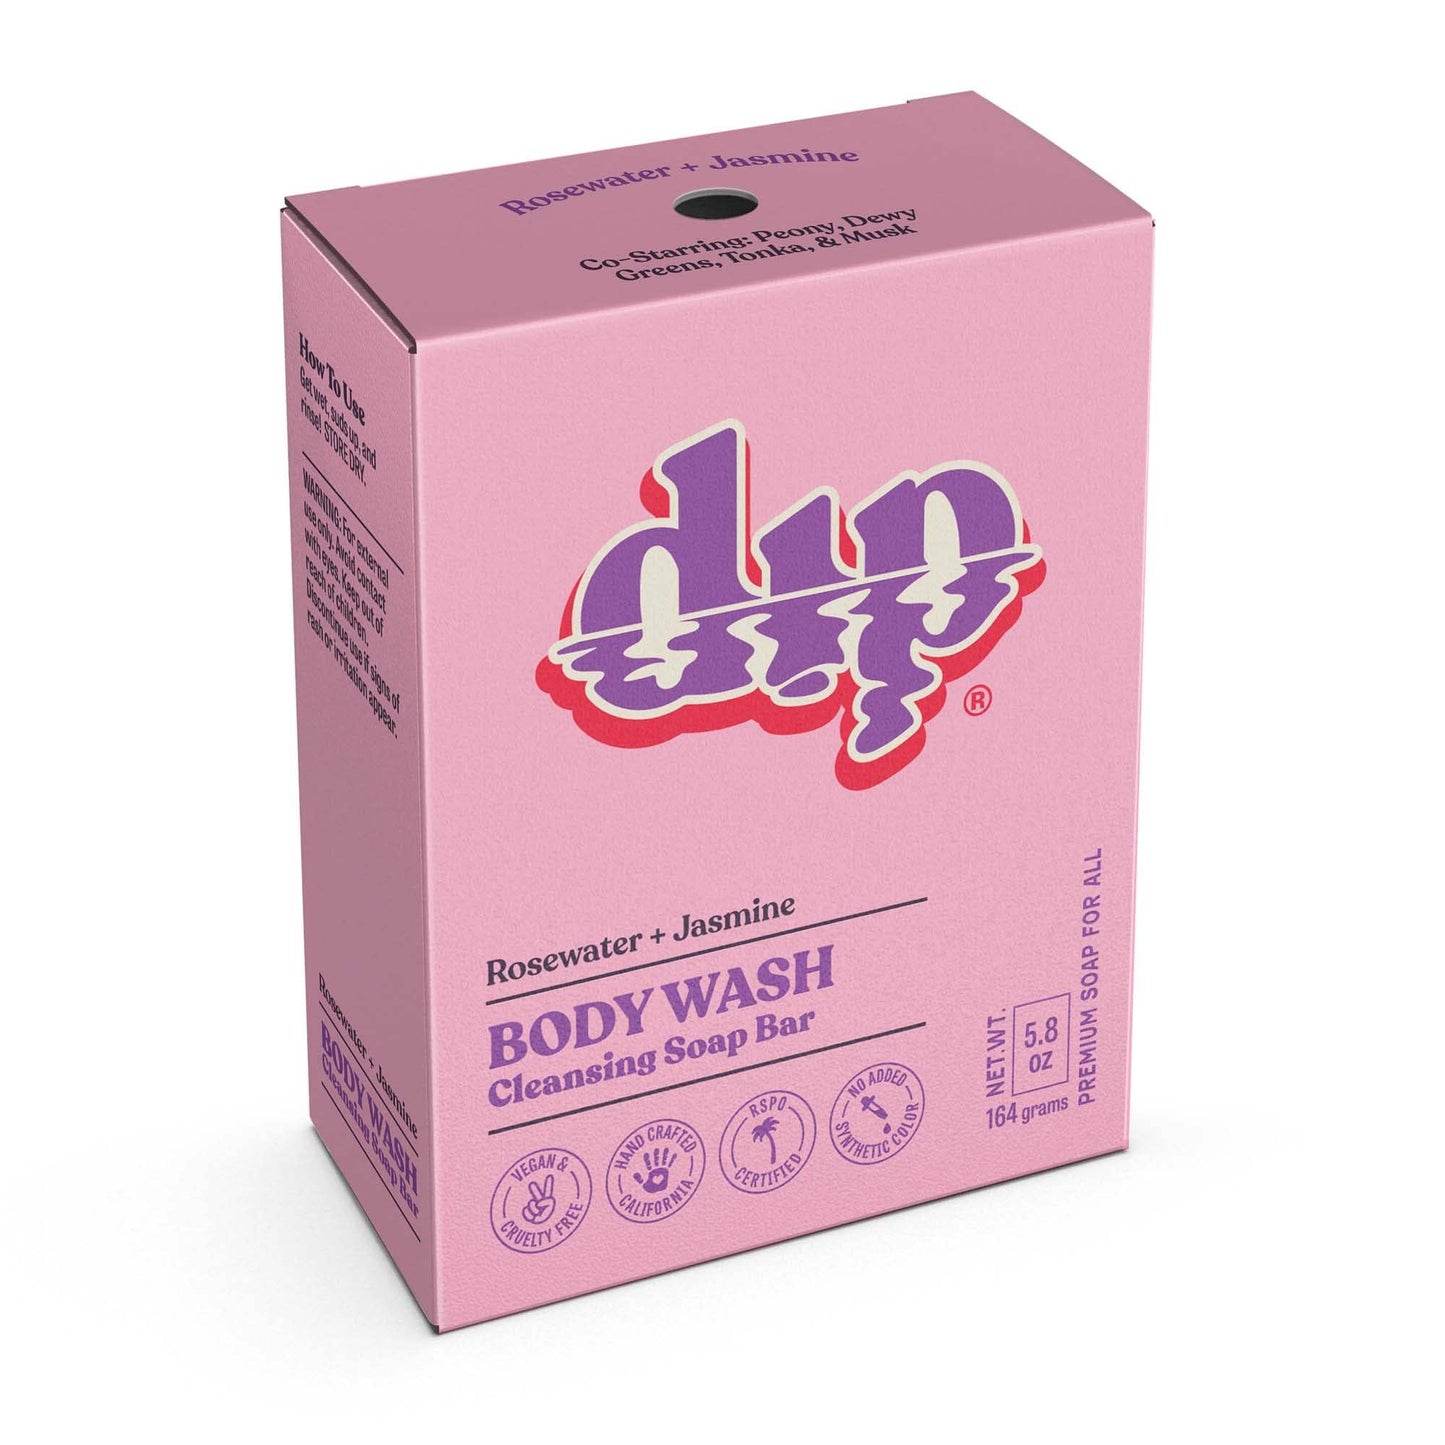 Dip - Body Wash Cleansing Soap Bar - Rosewater & Jasmine